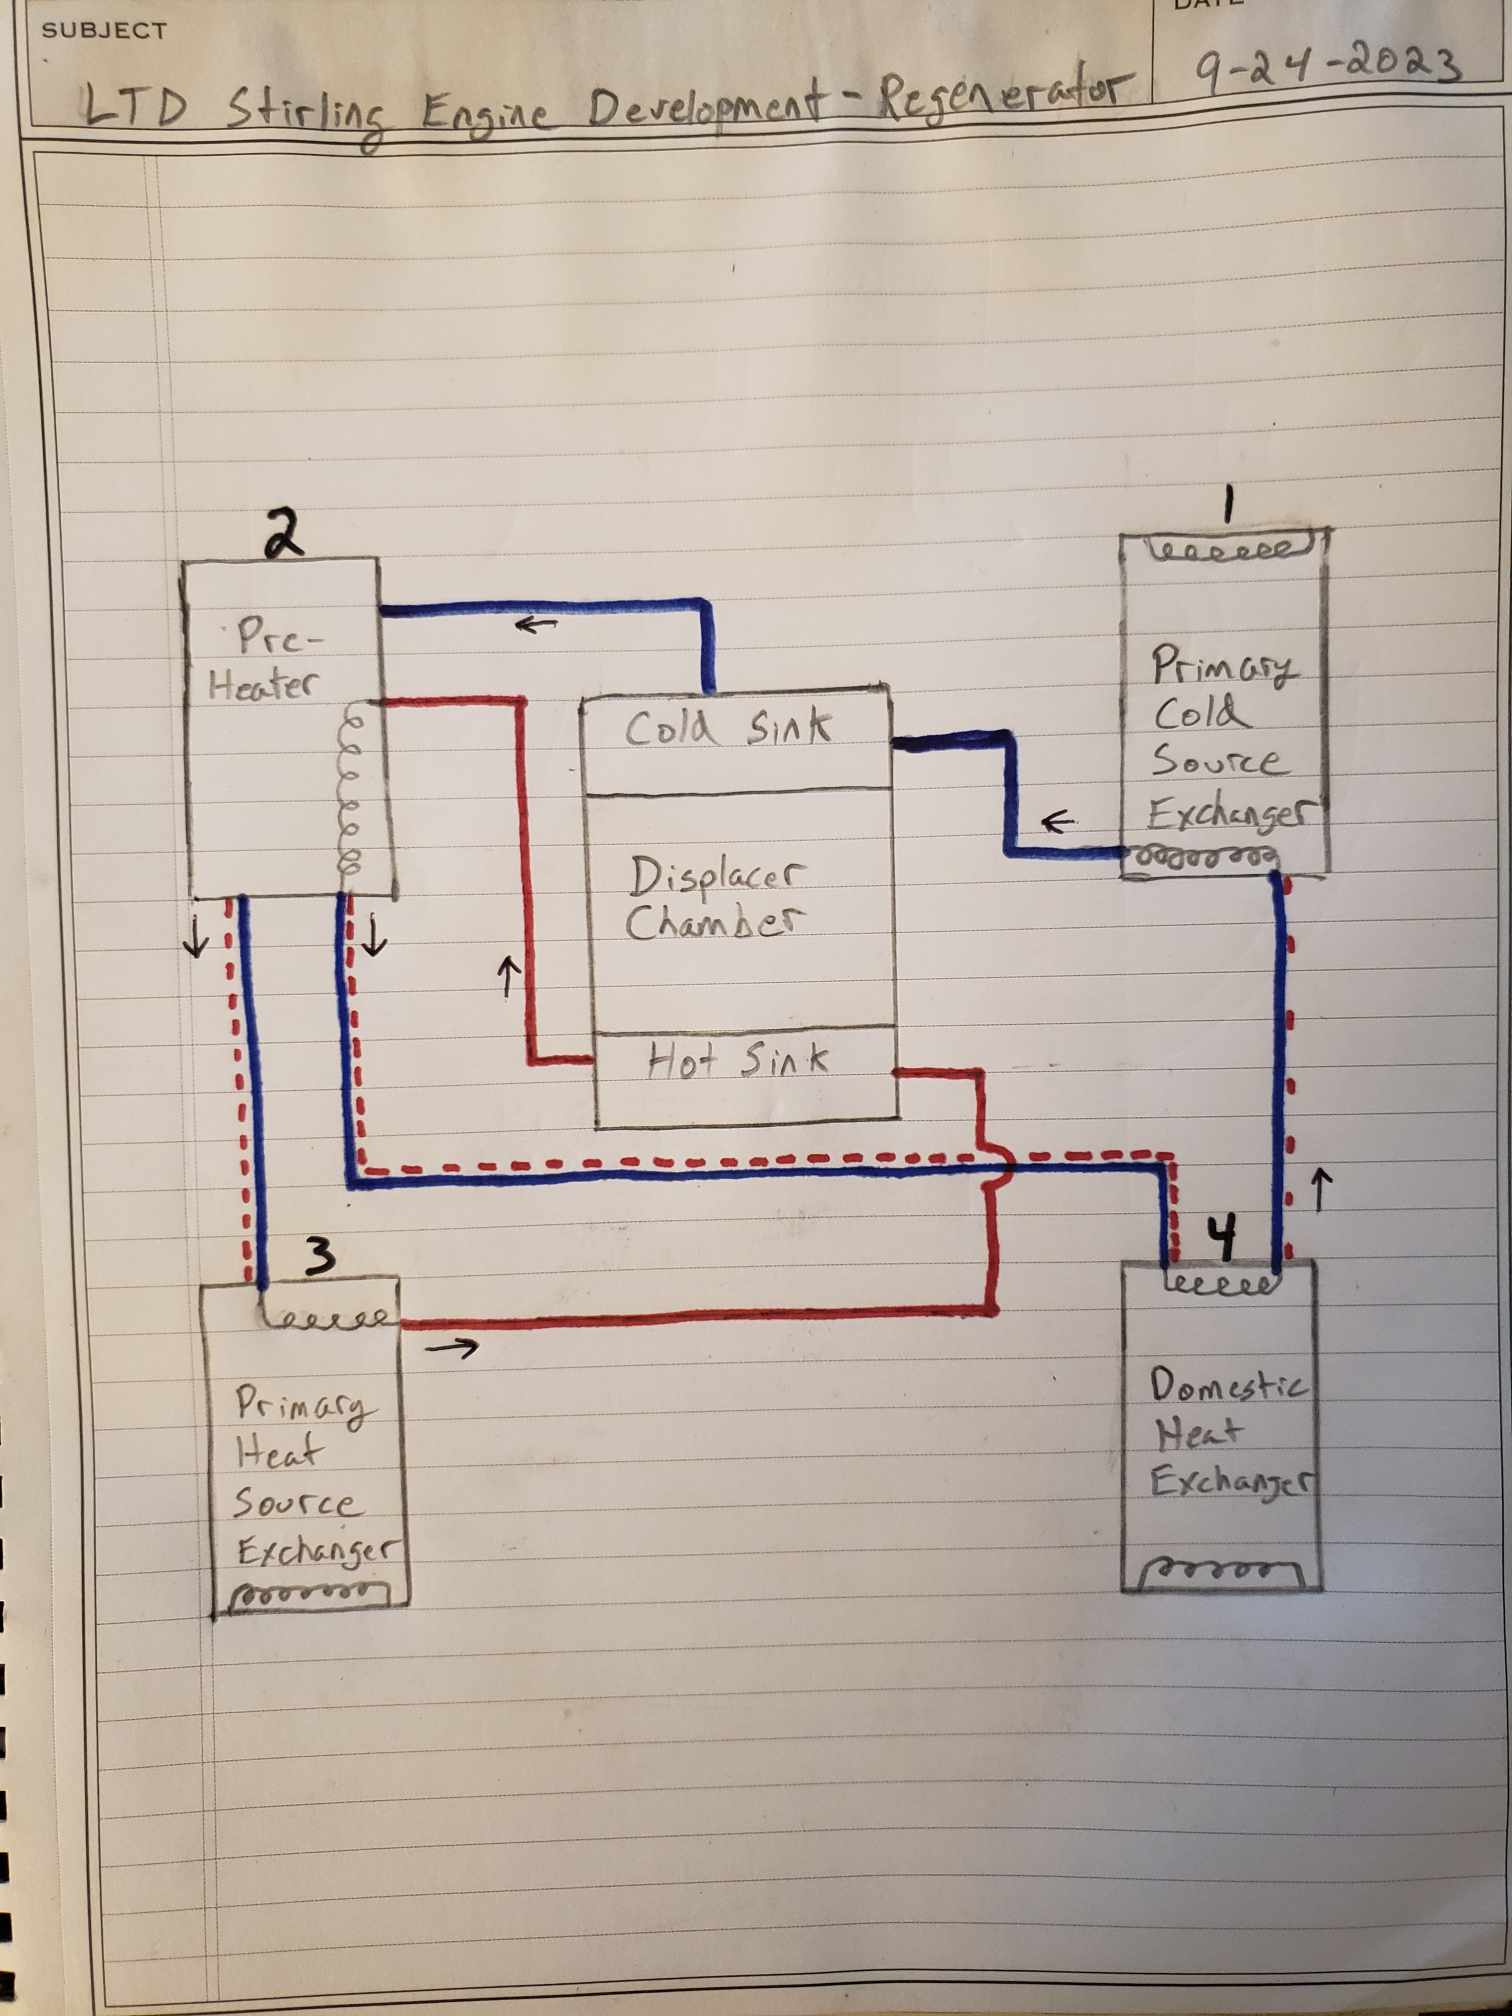 LTD External Regenerator flow diagram.jpg